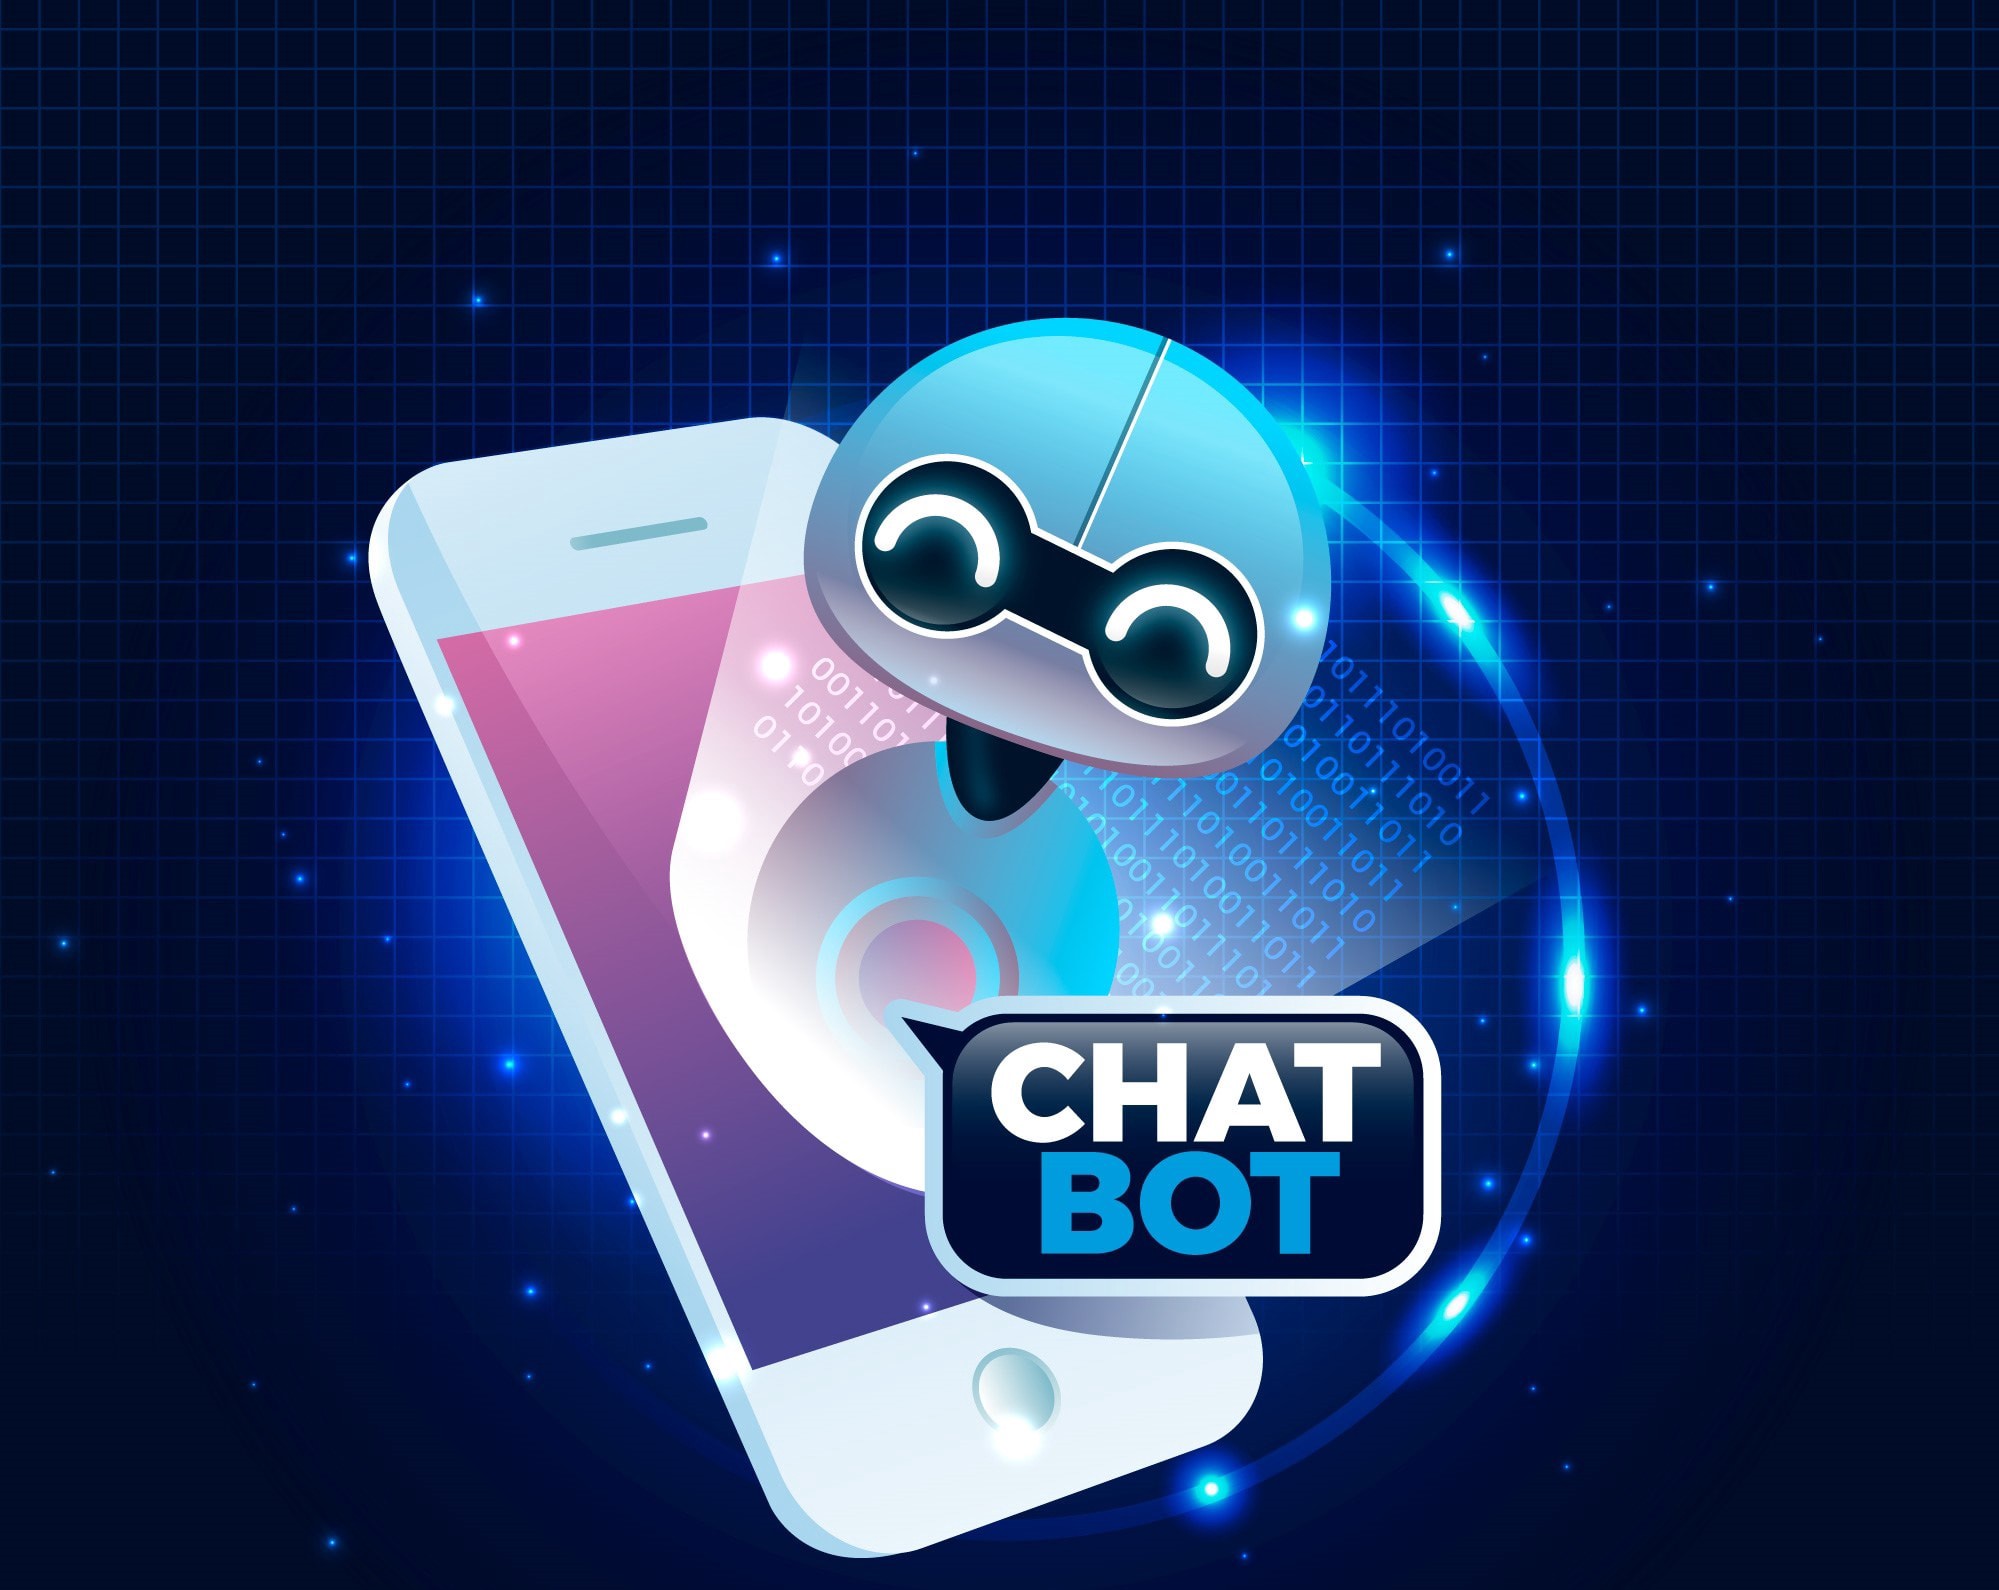 chatbot maker similar to existor